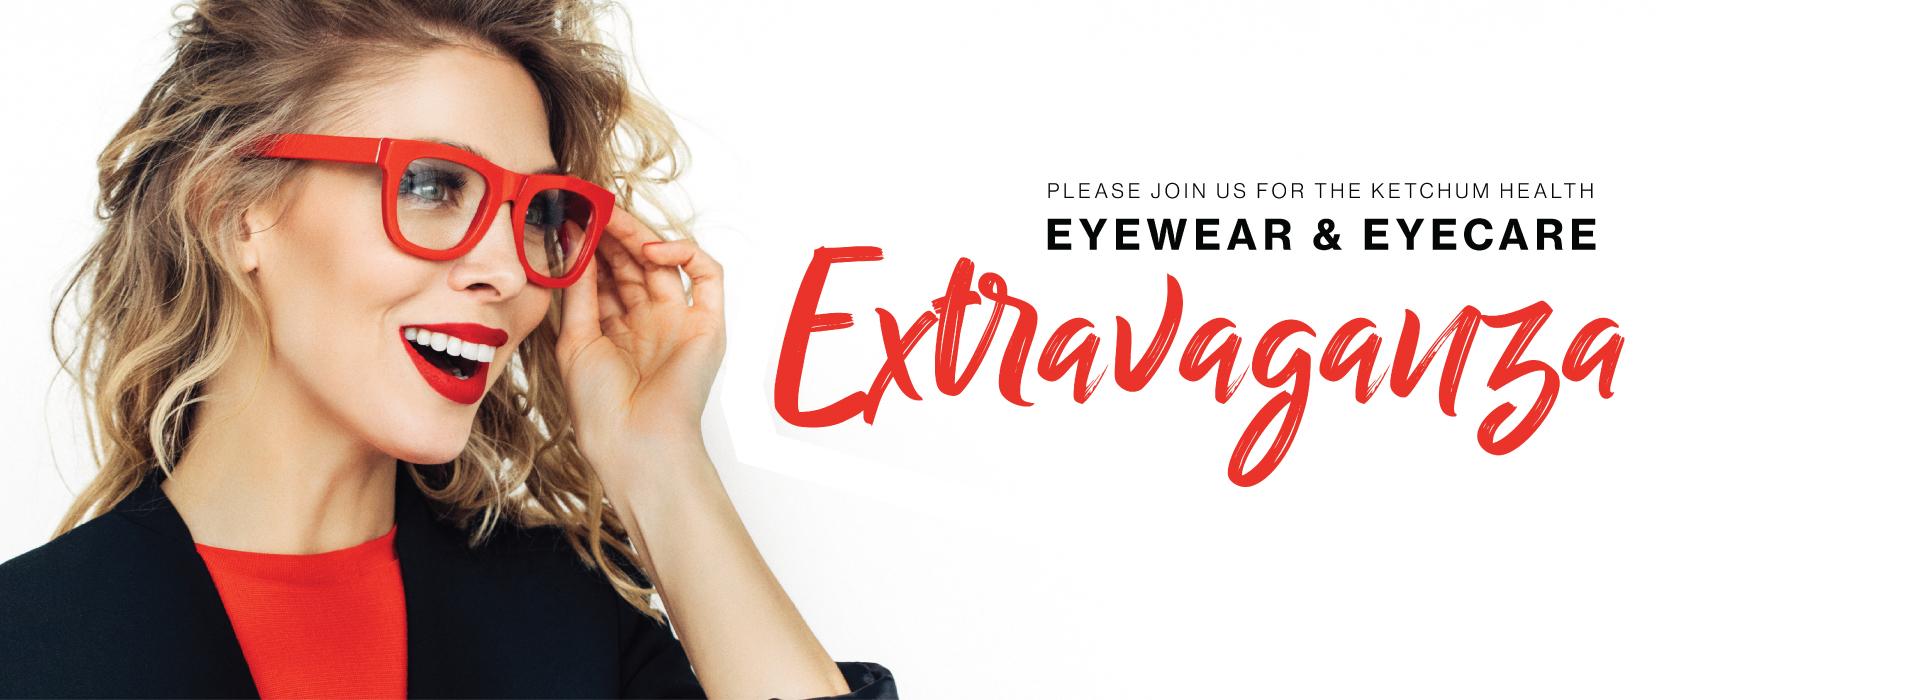 Eyewear & Eyecare Extravaganza (E3)